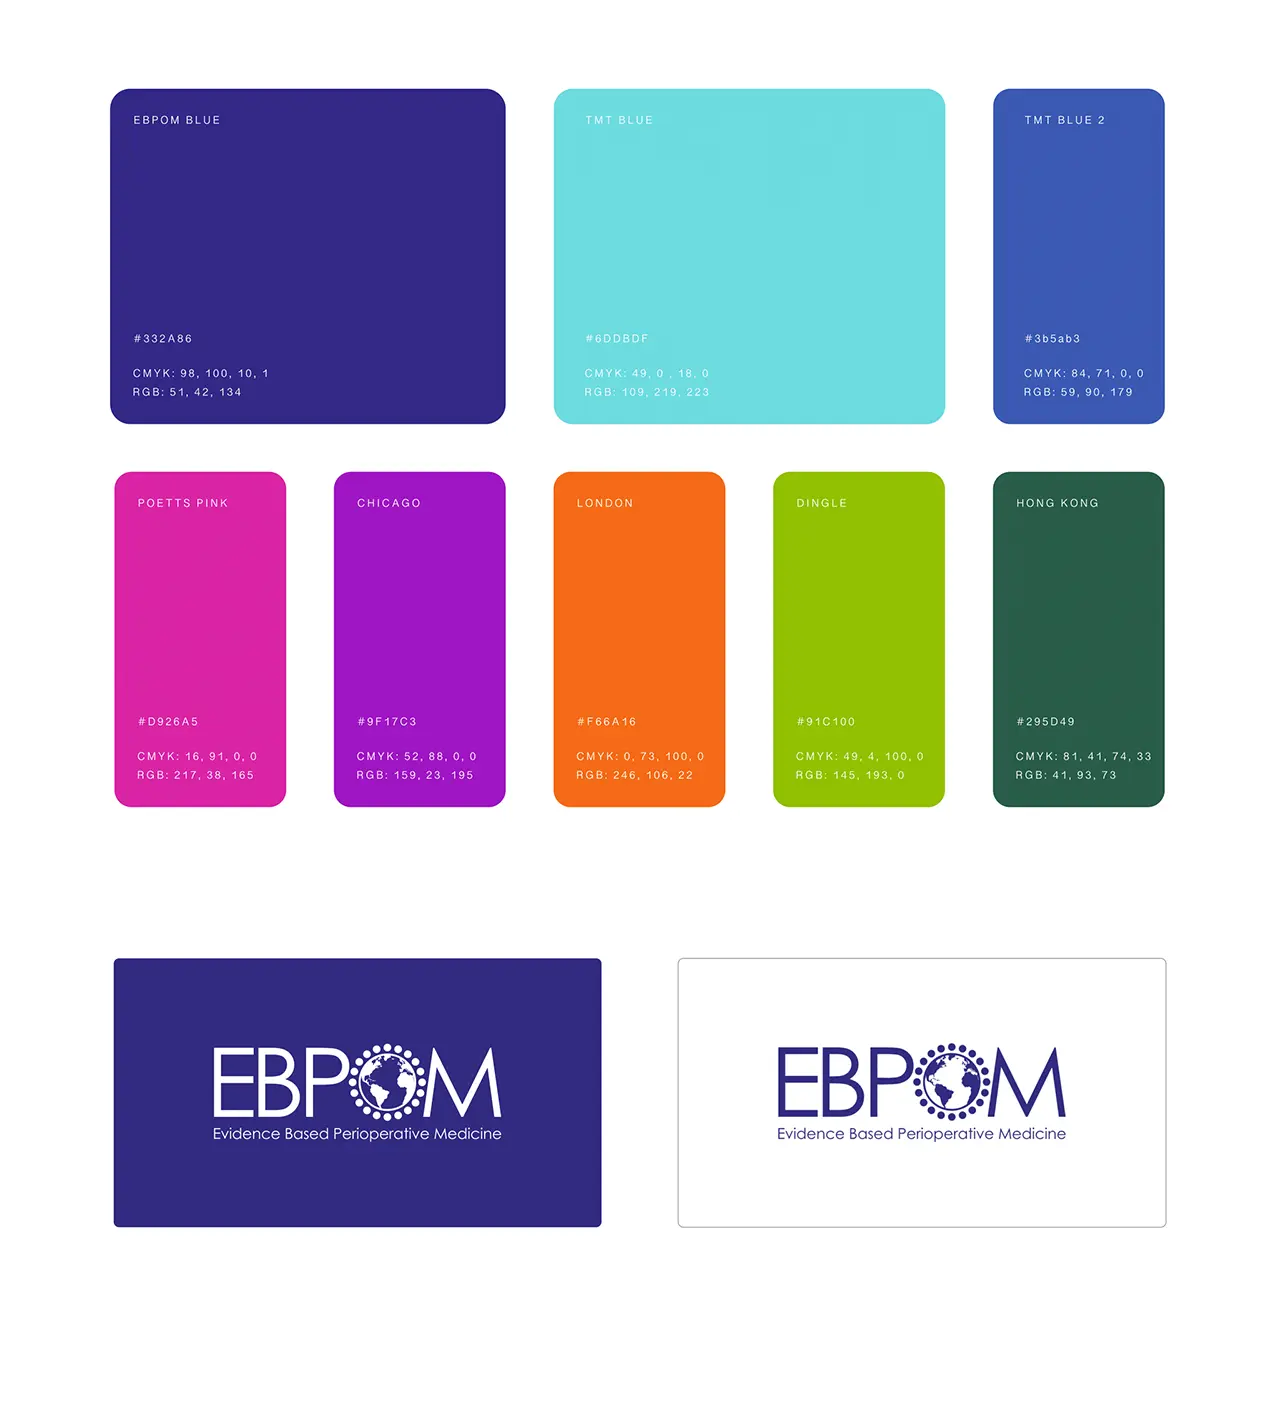 EBPOM Branding